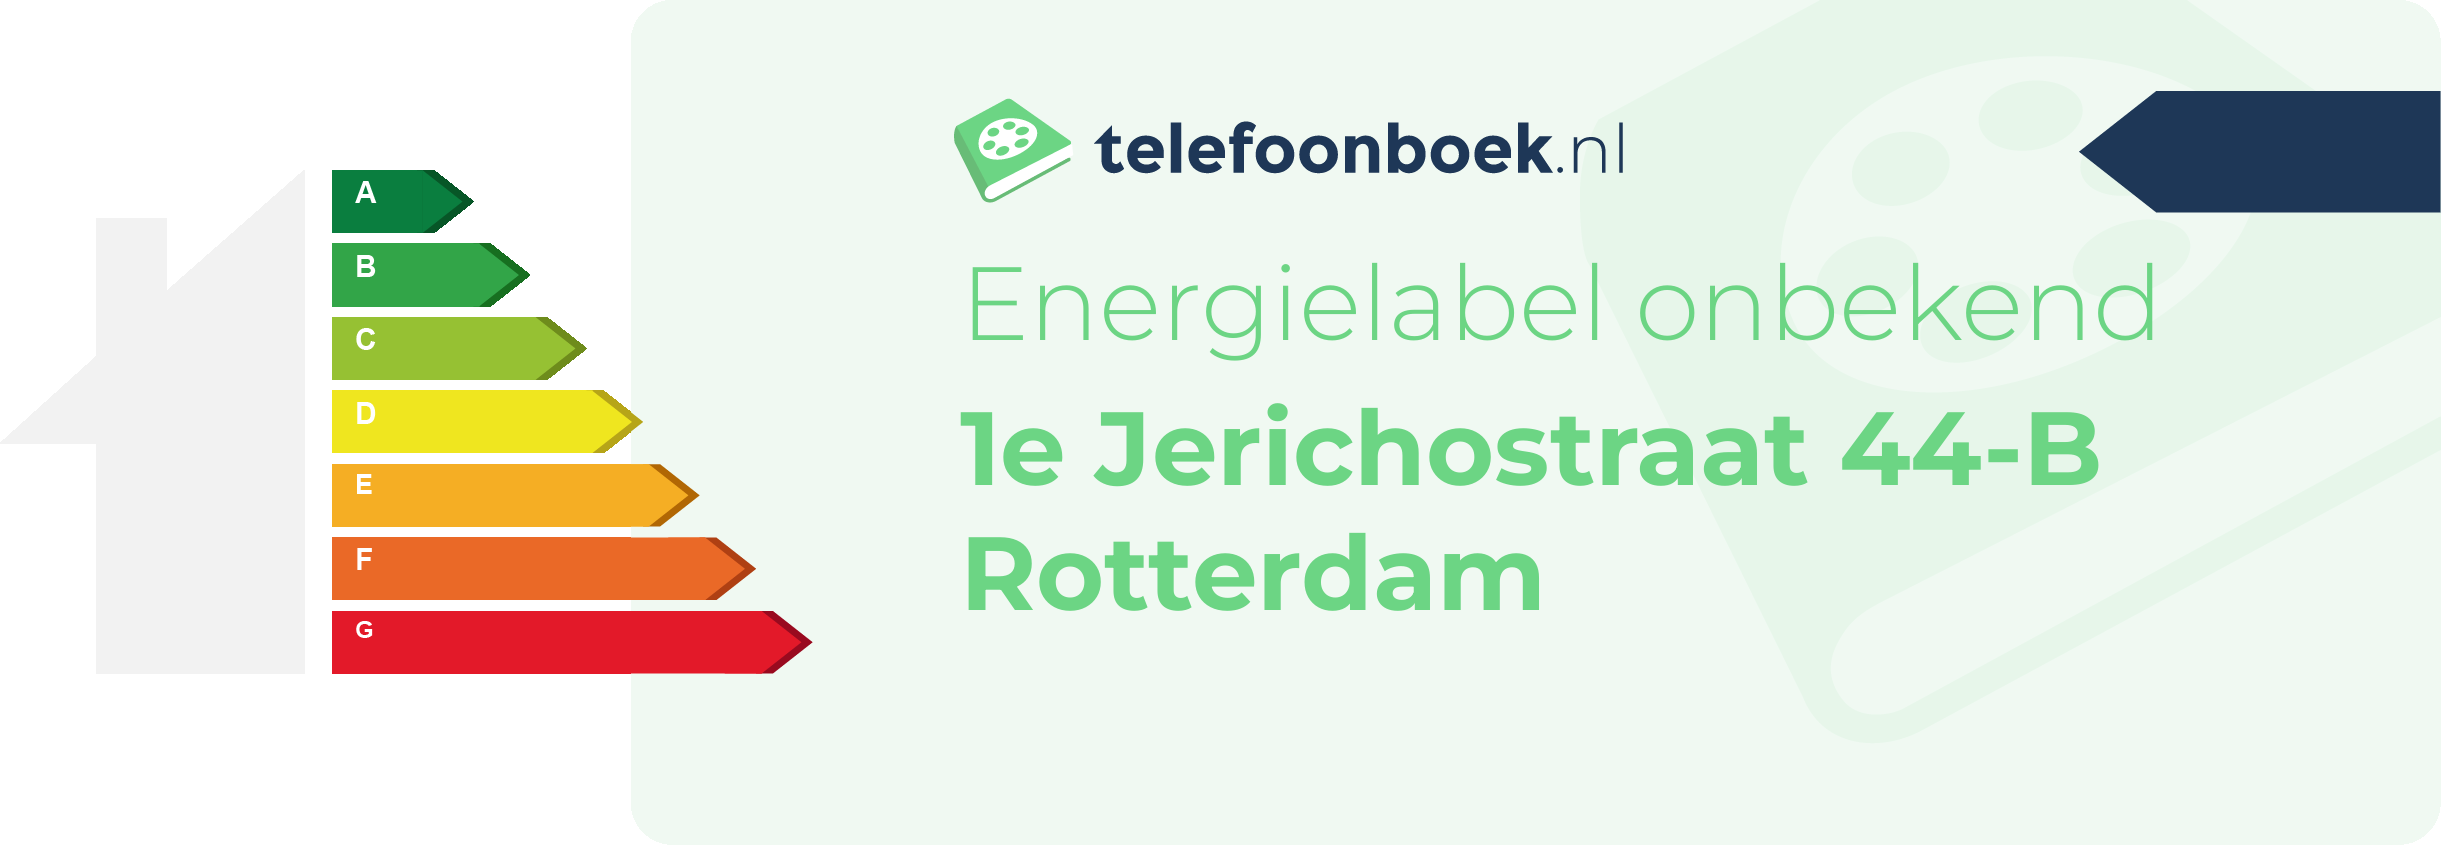 Energielabel 1e Jerichostraat 44-B Rotterdam